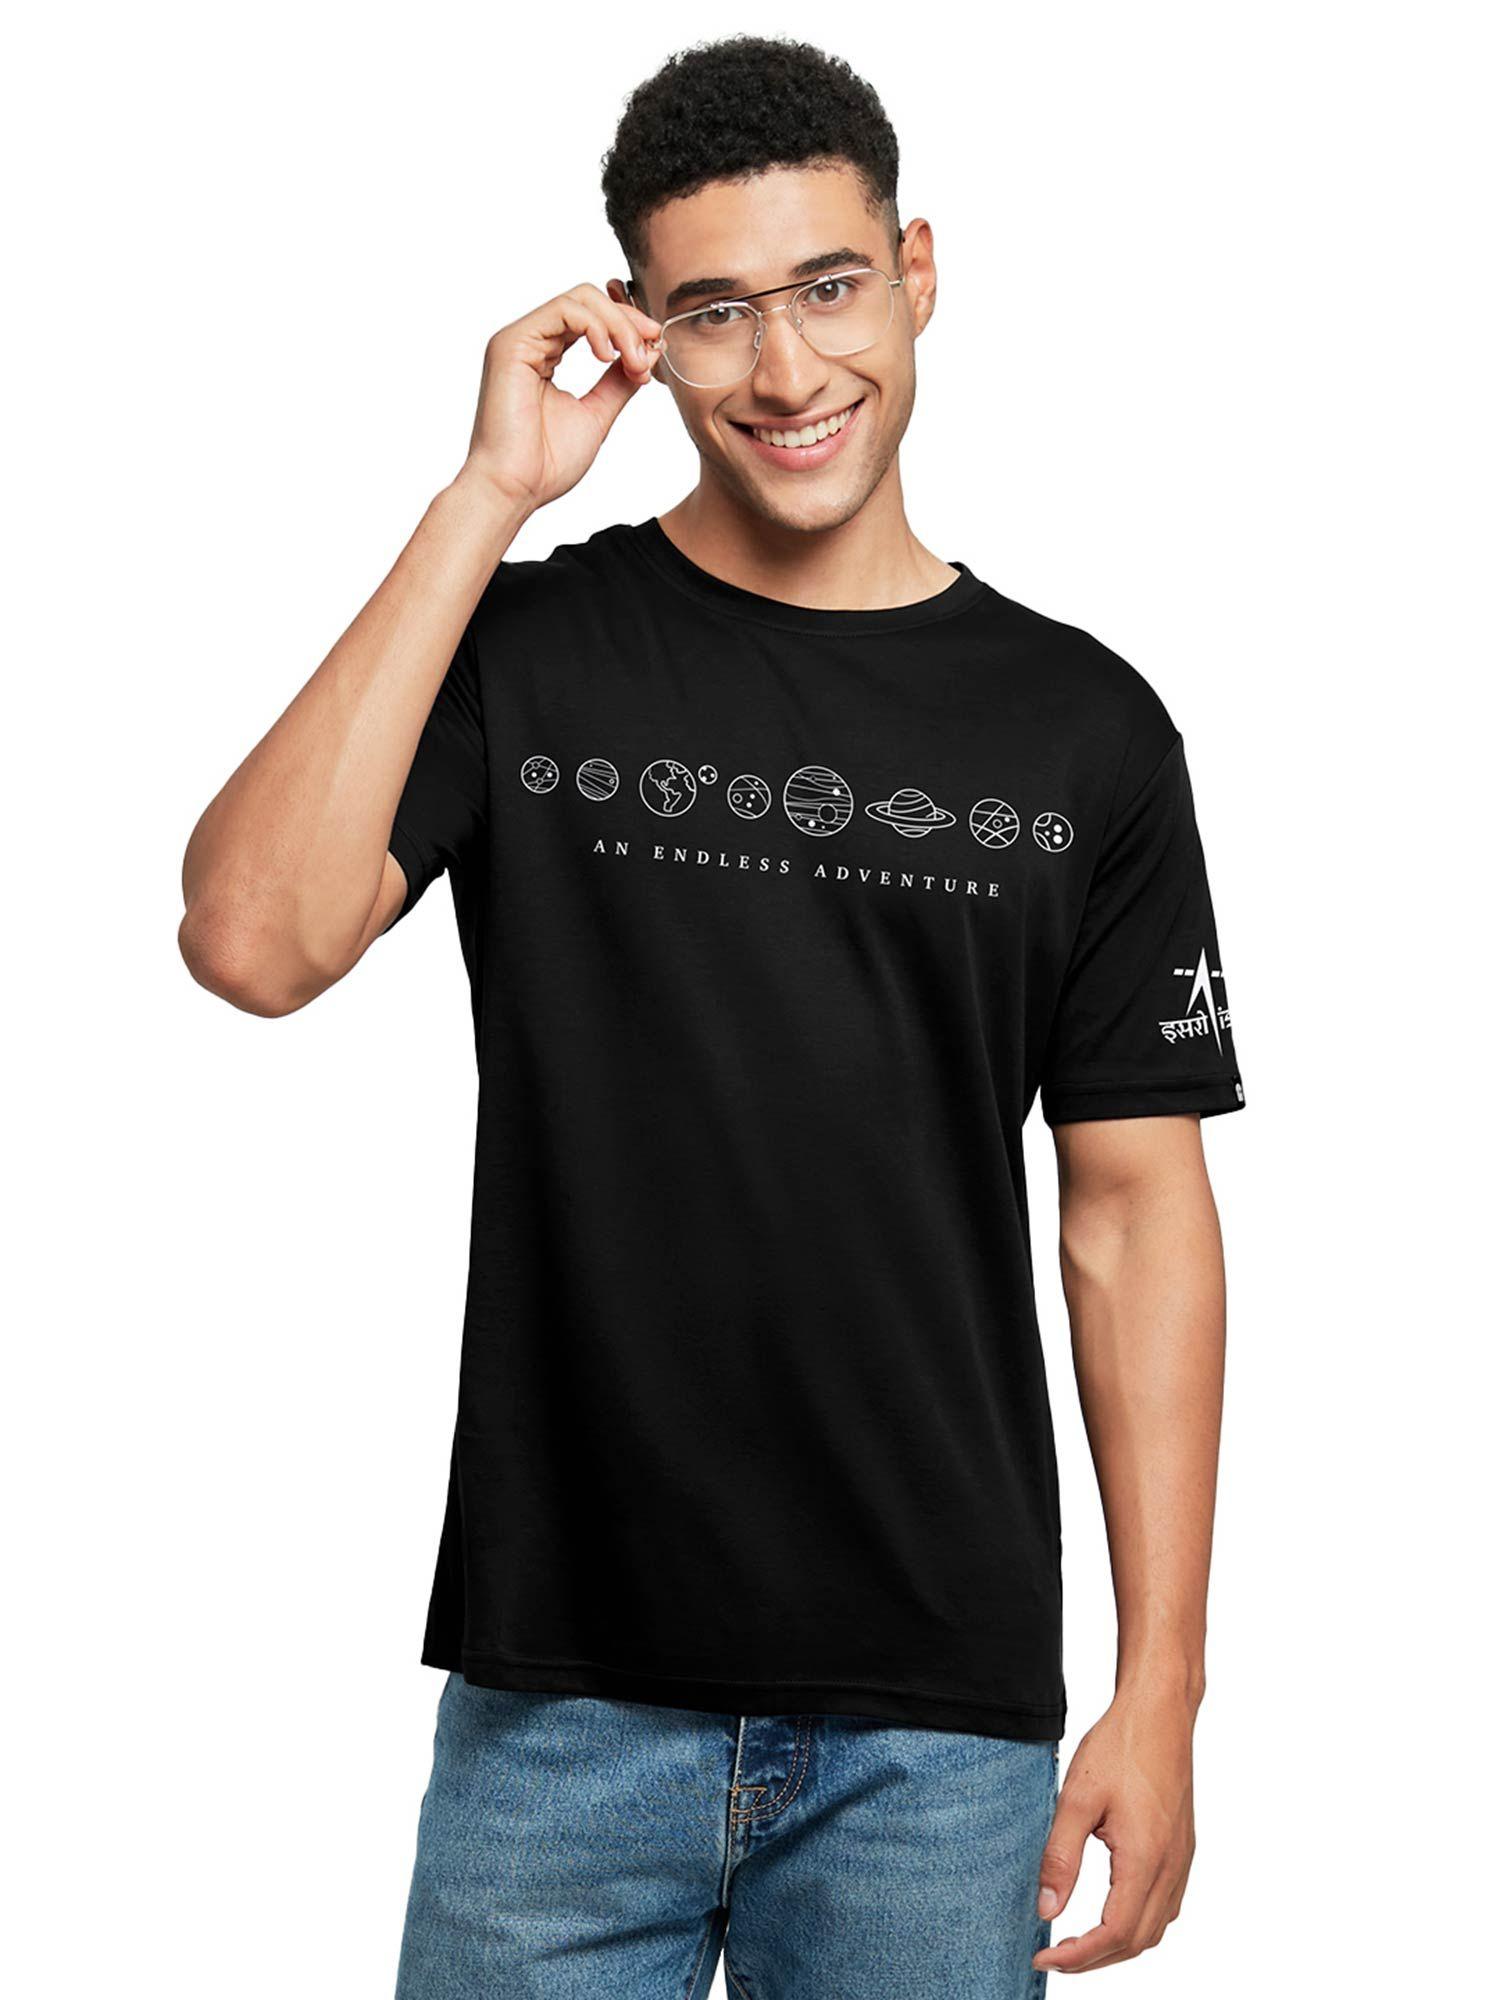 isro an endless adventure black t-shirt for men